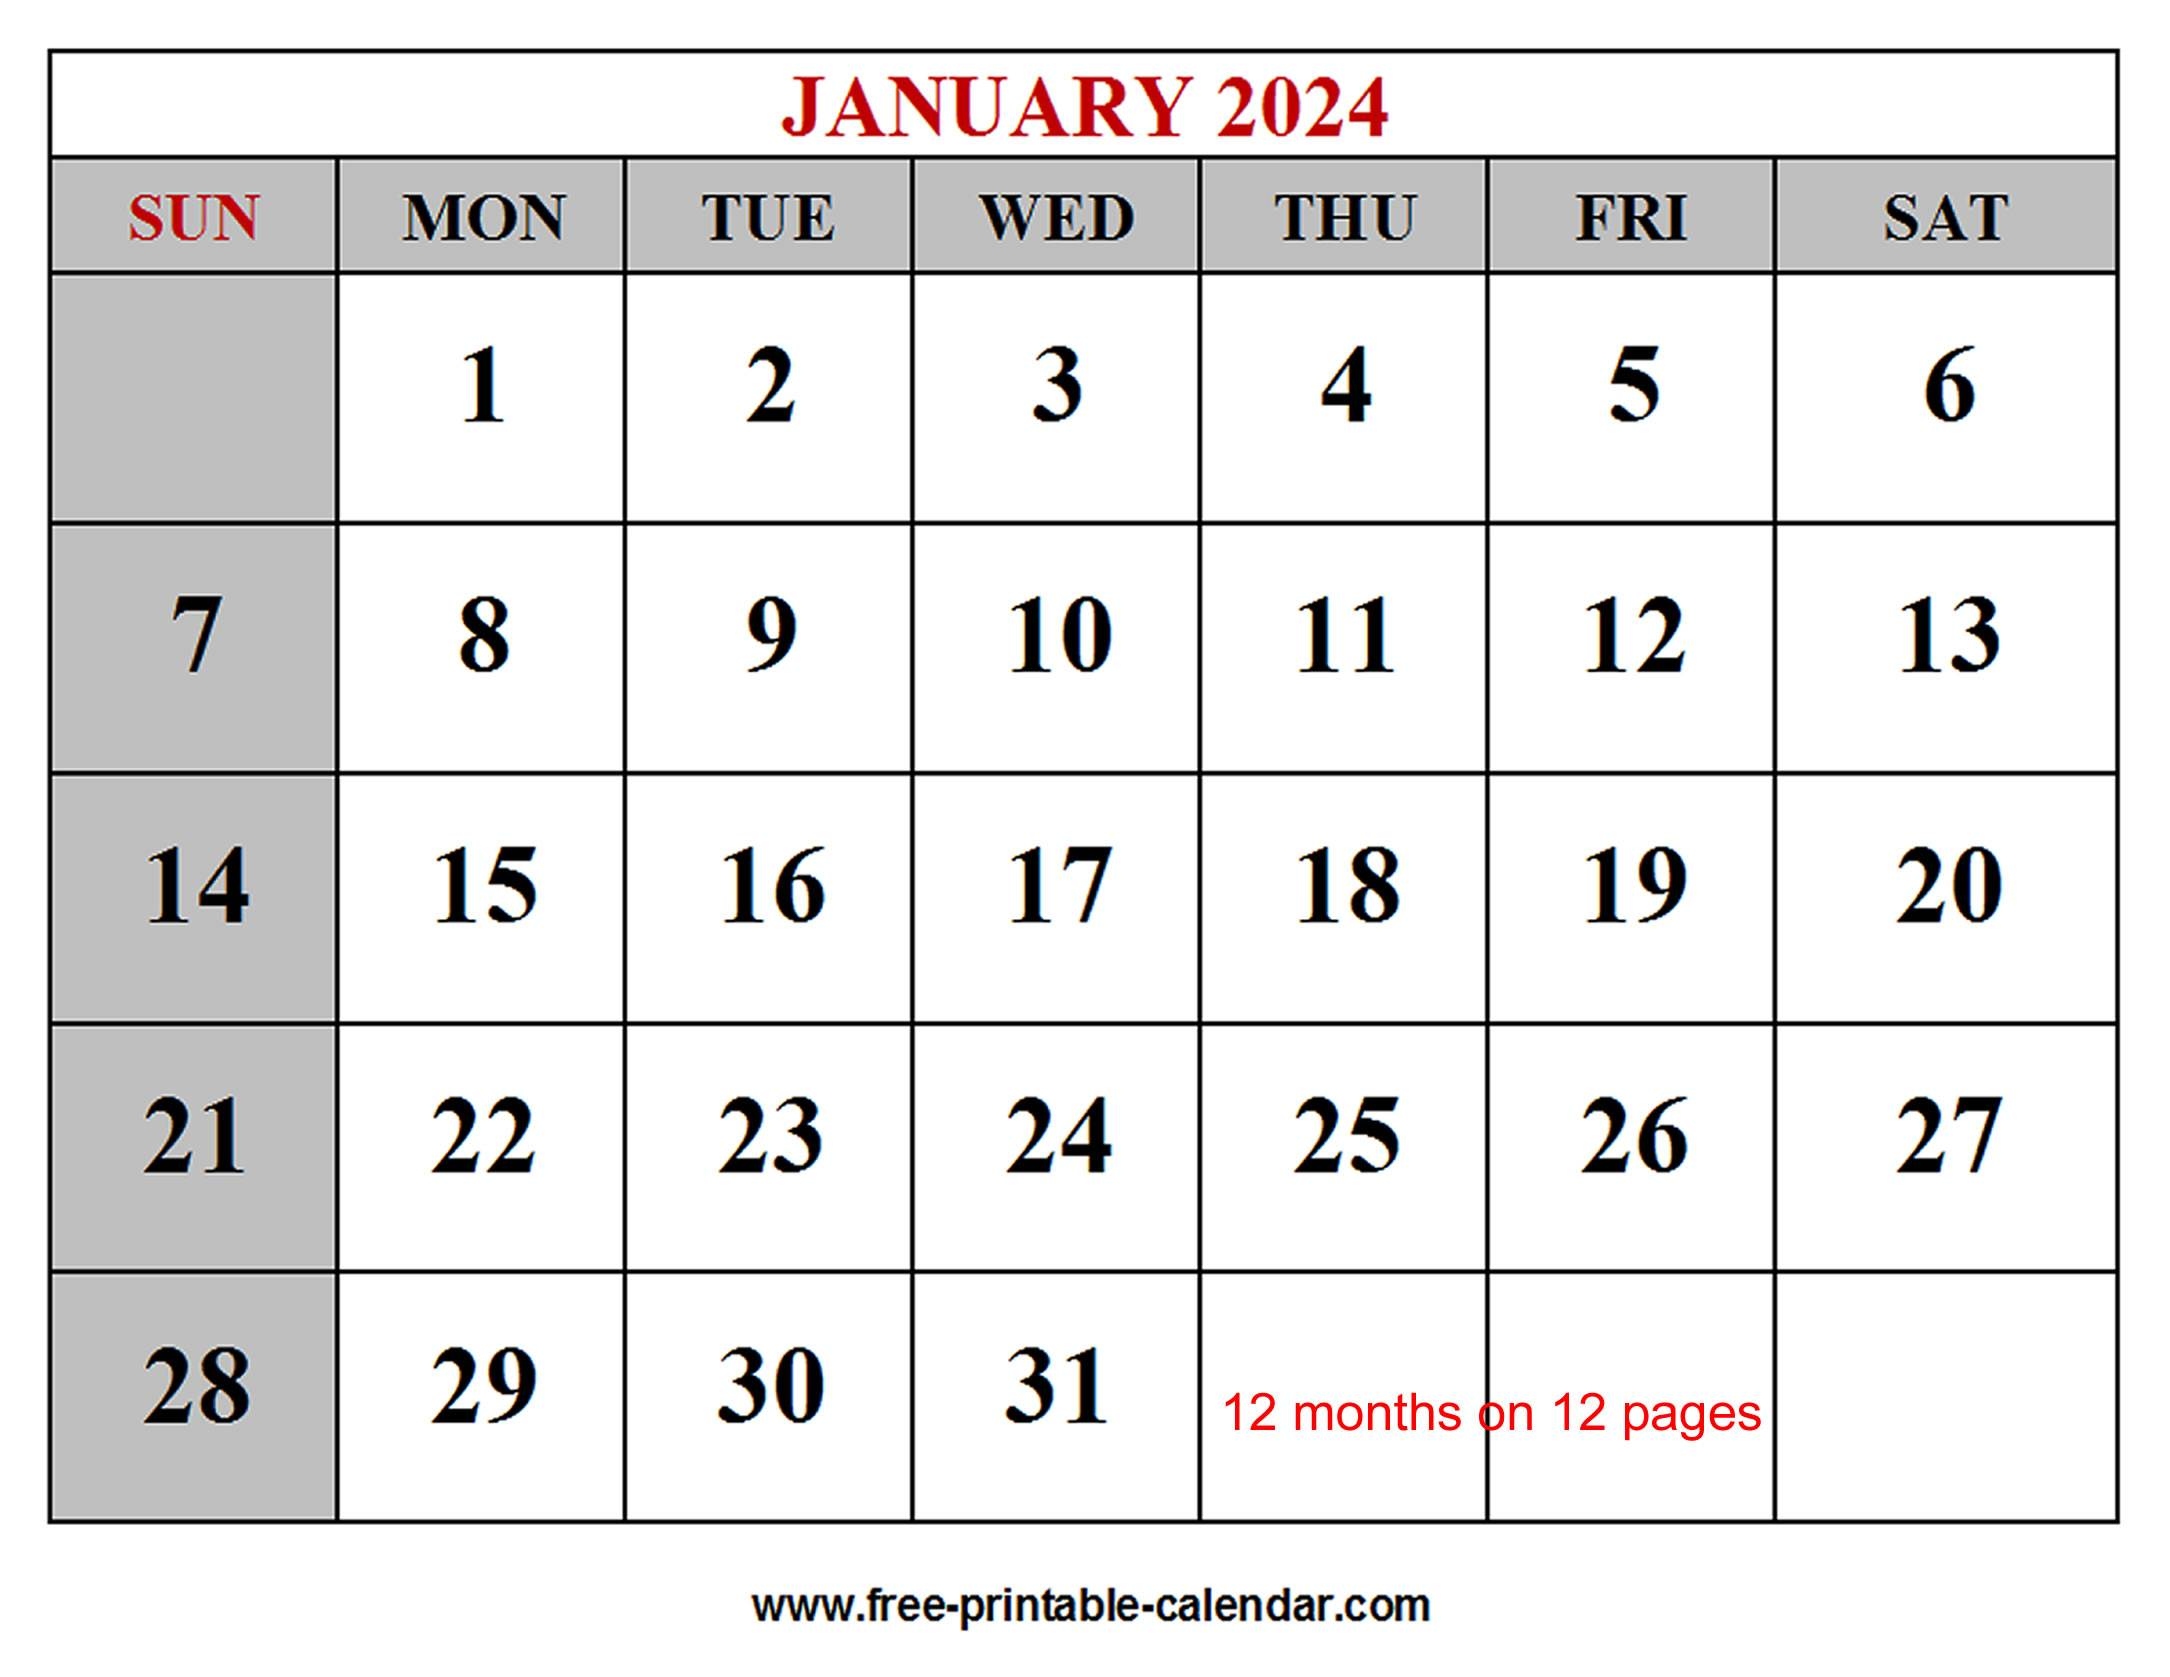 Year 2024 Calendar Templates - Free-Printable-Calendar within Free Printable Calendar 2024 20